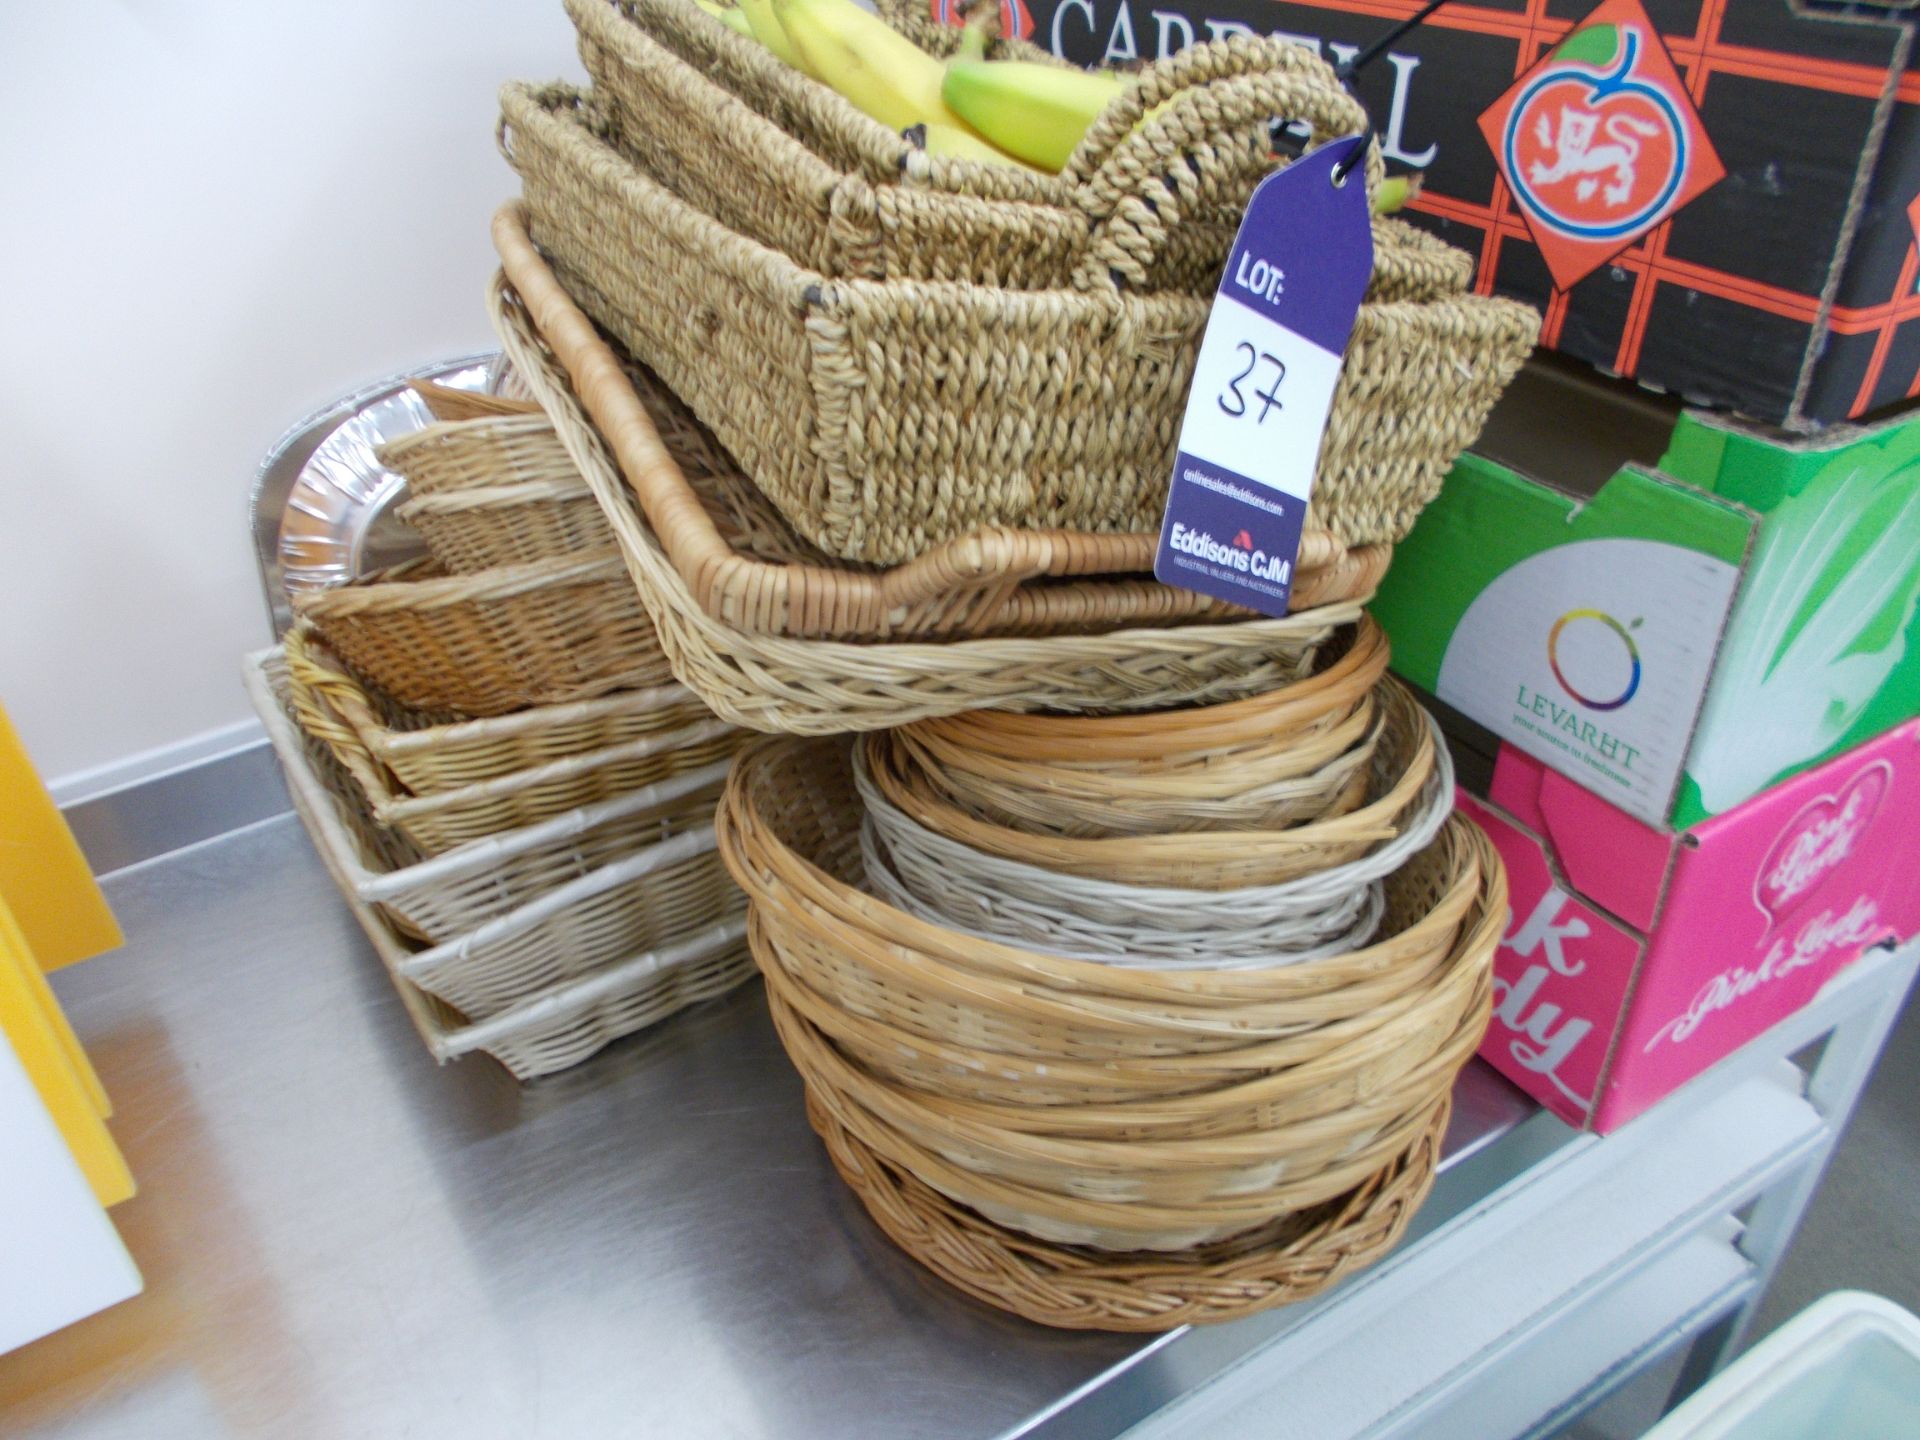 Various wicker baskets